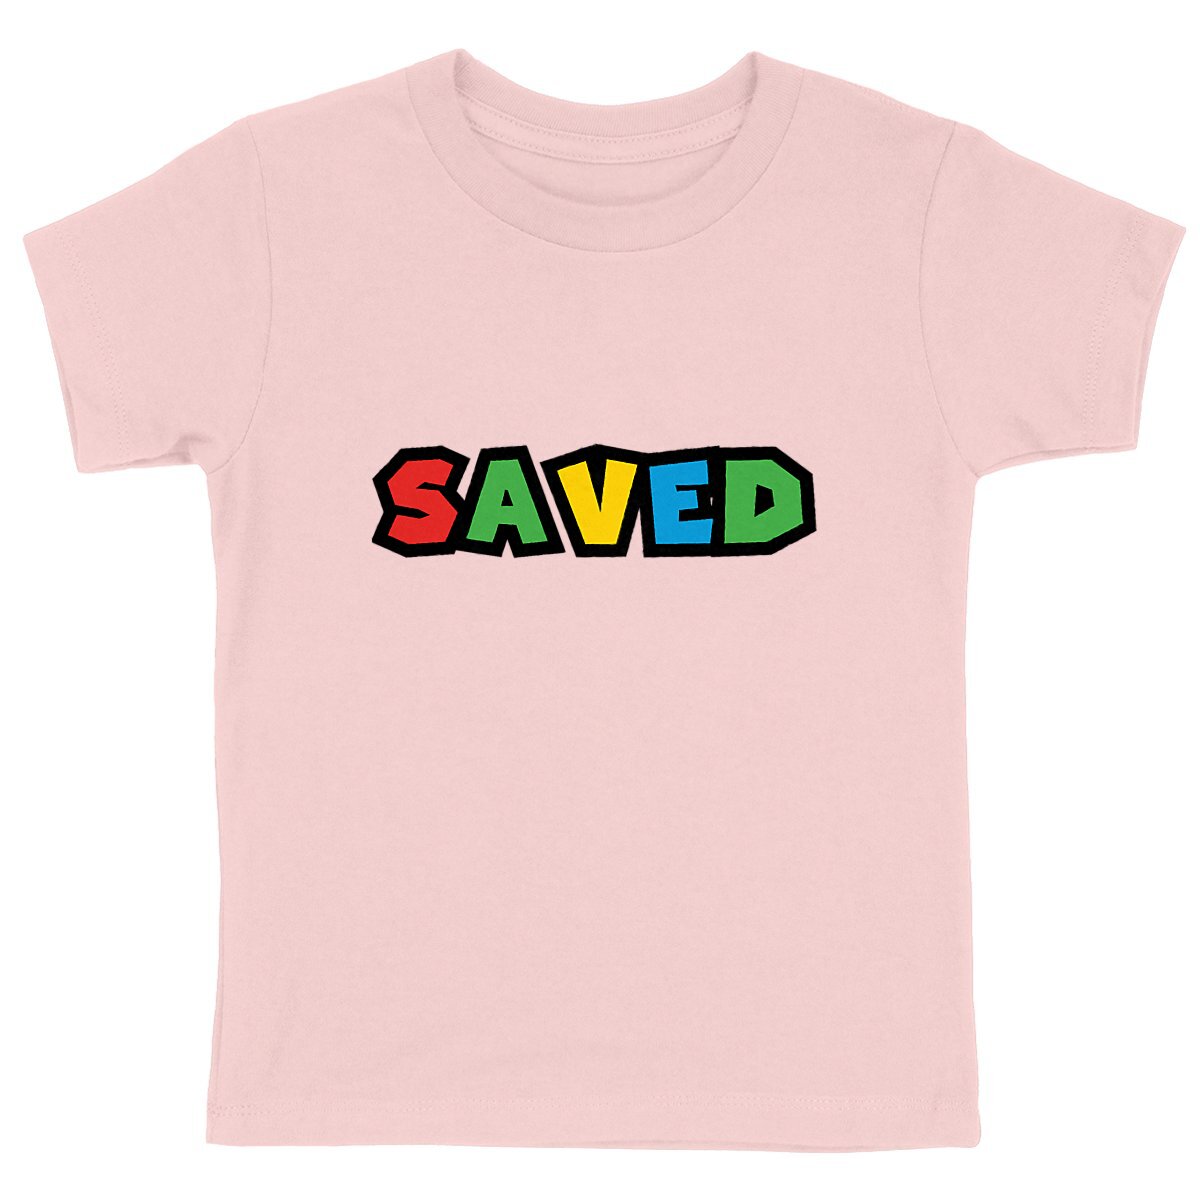 SAVED Premium Kids T-Shirt